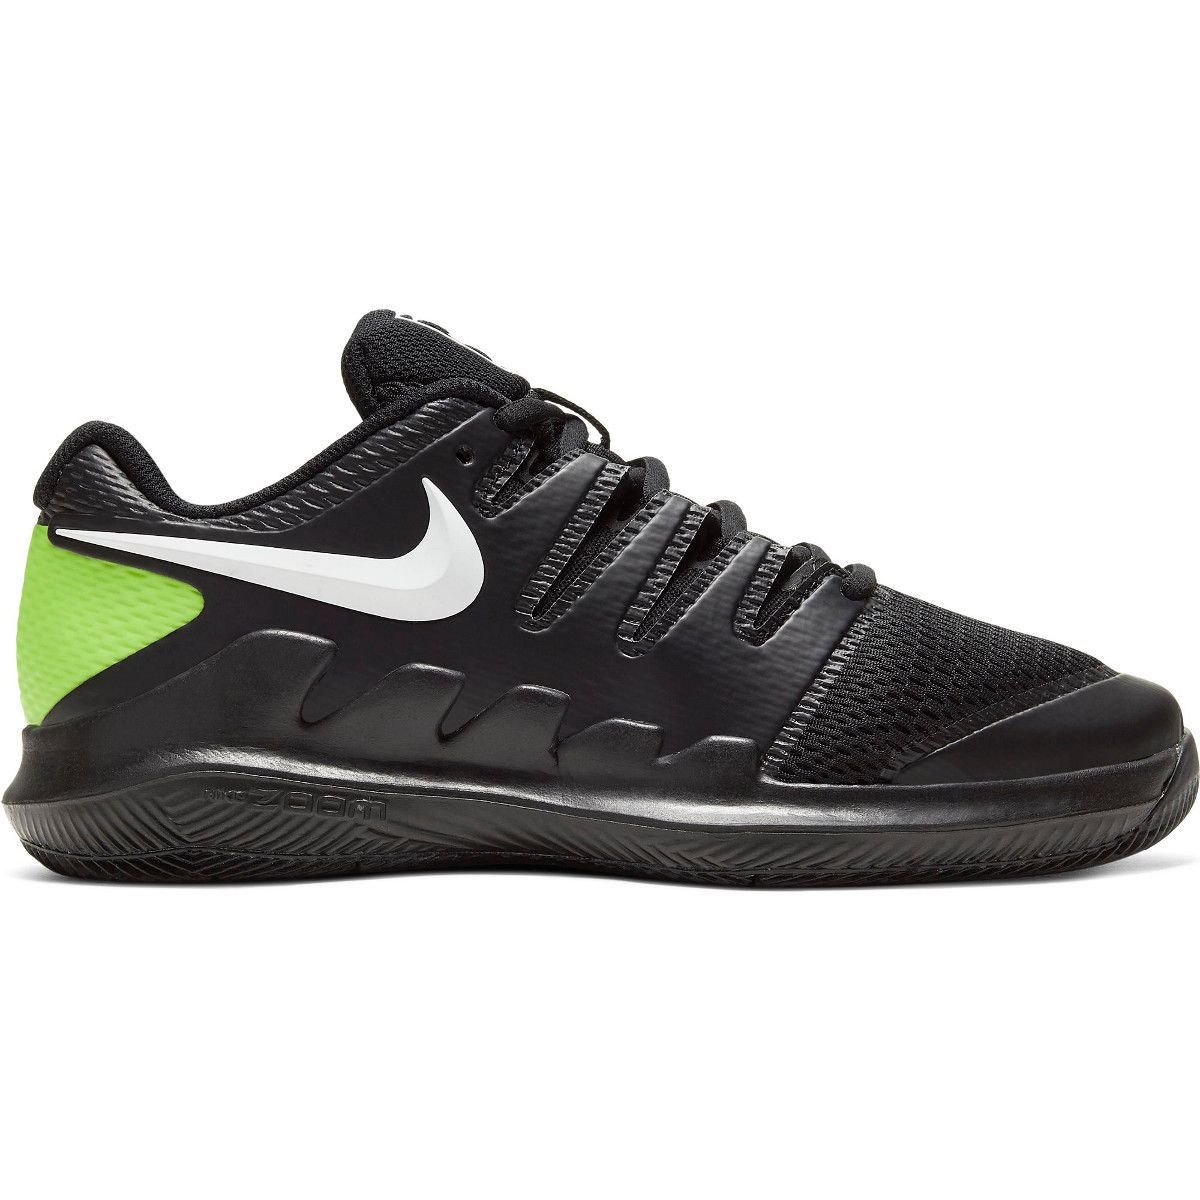 NikeCourt Vapor X Junior Tennis Shoes AR8851-009